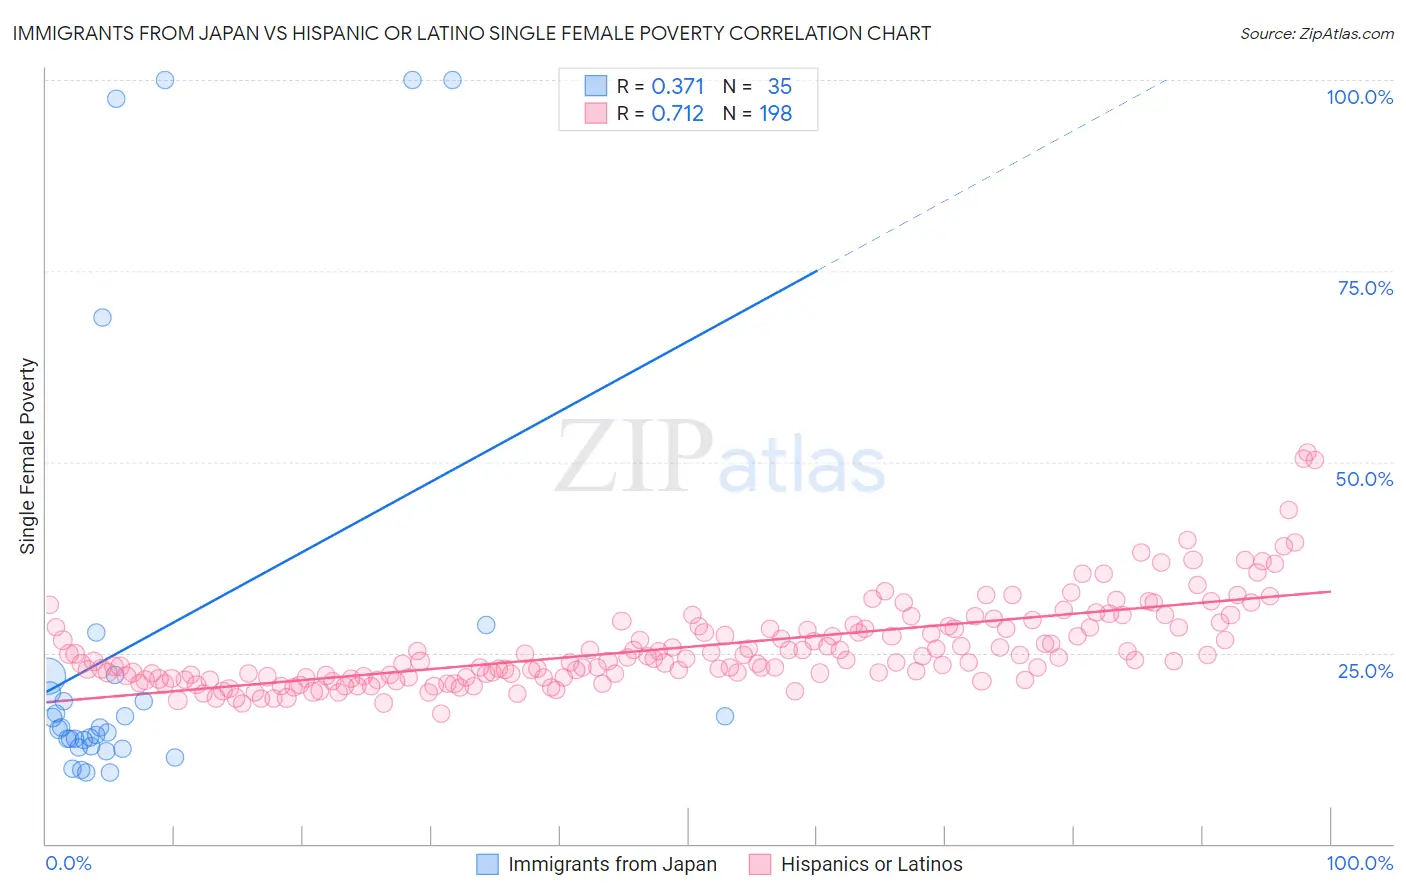 Immigrants from Japan vs Hispanic or Latino Single Female Poverty